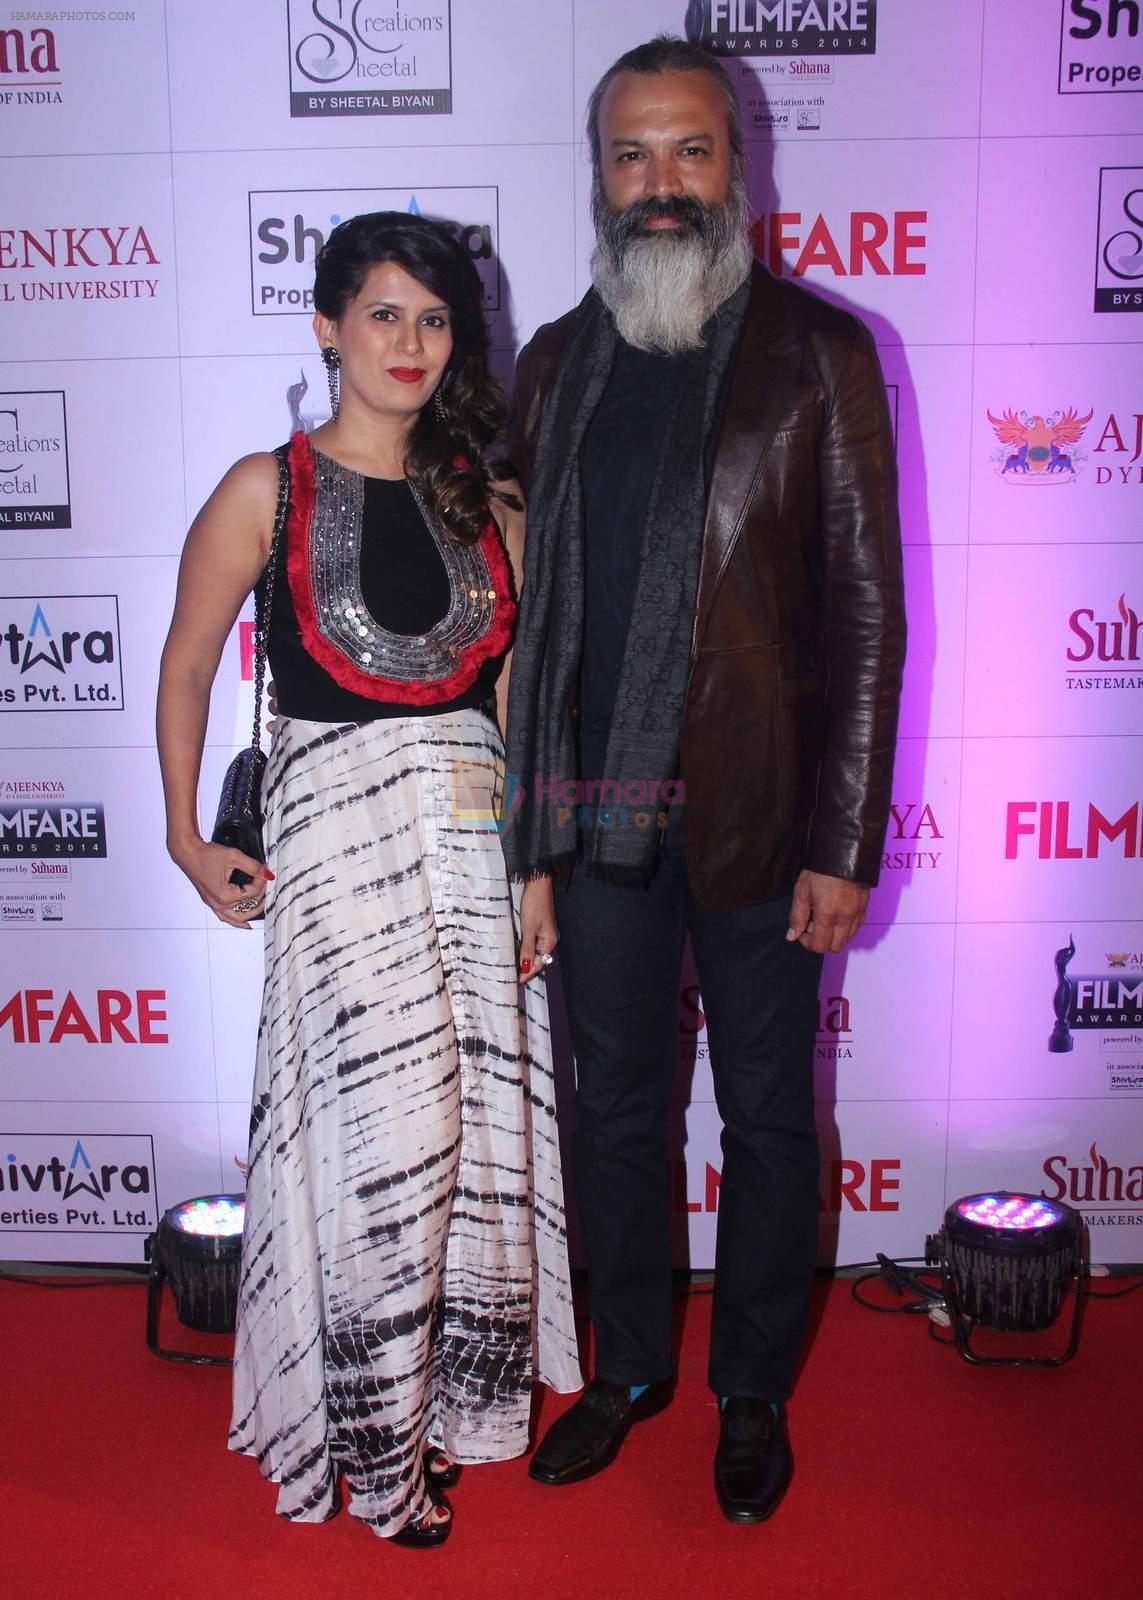 Sonali Khare at the Red Carpet of _Ajeenkya DY Patil University Filmfare Awards